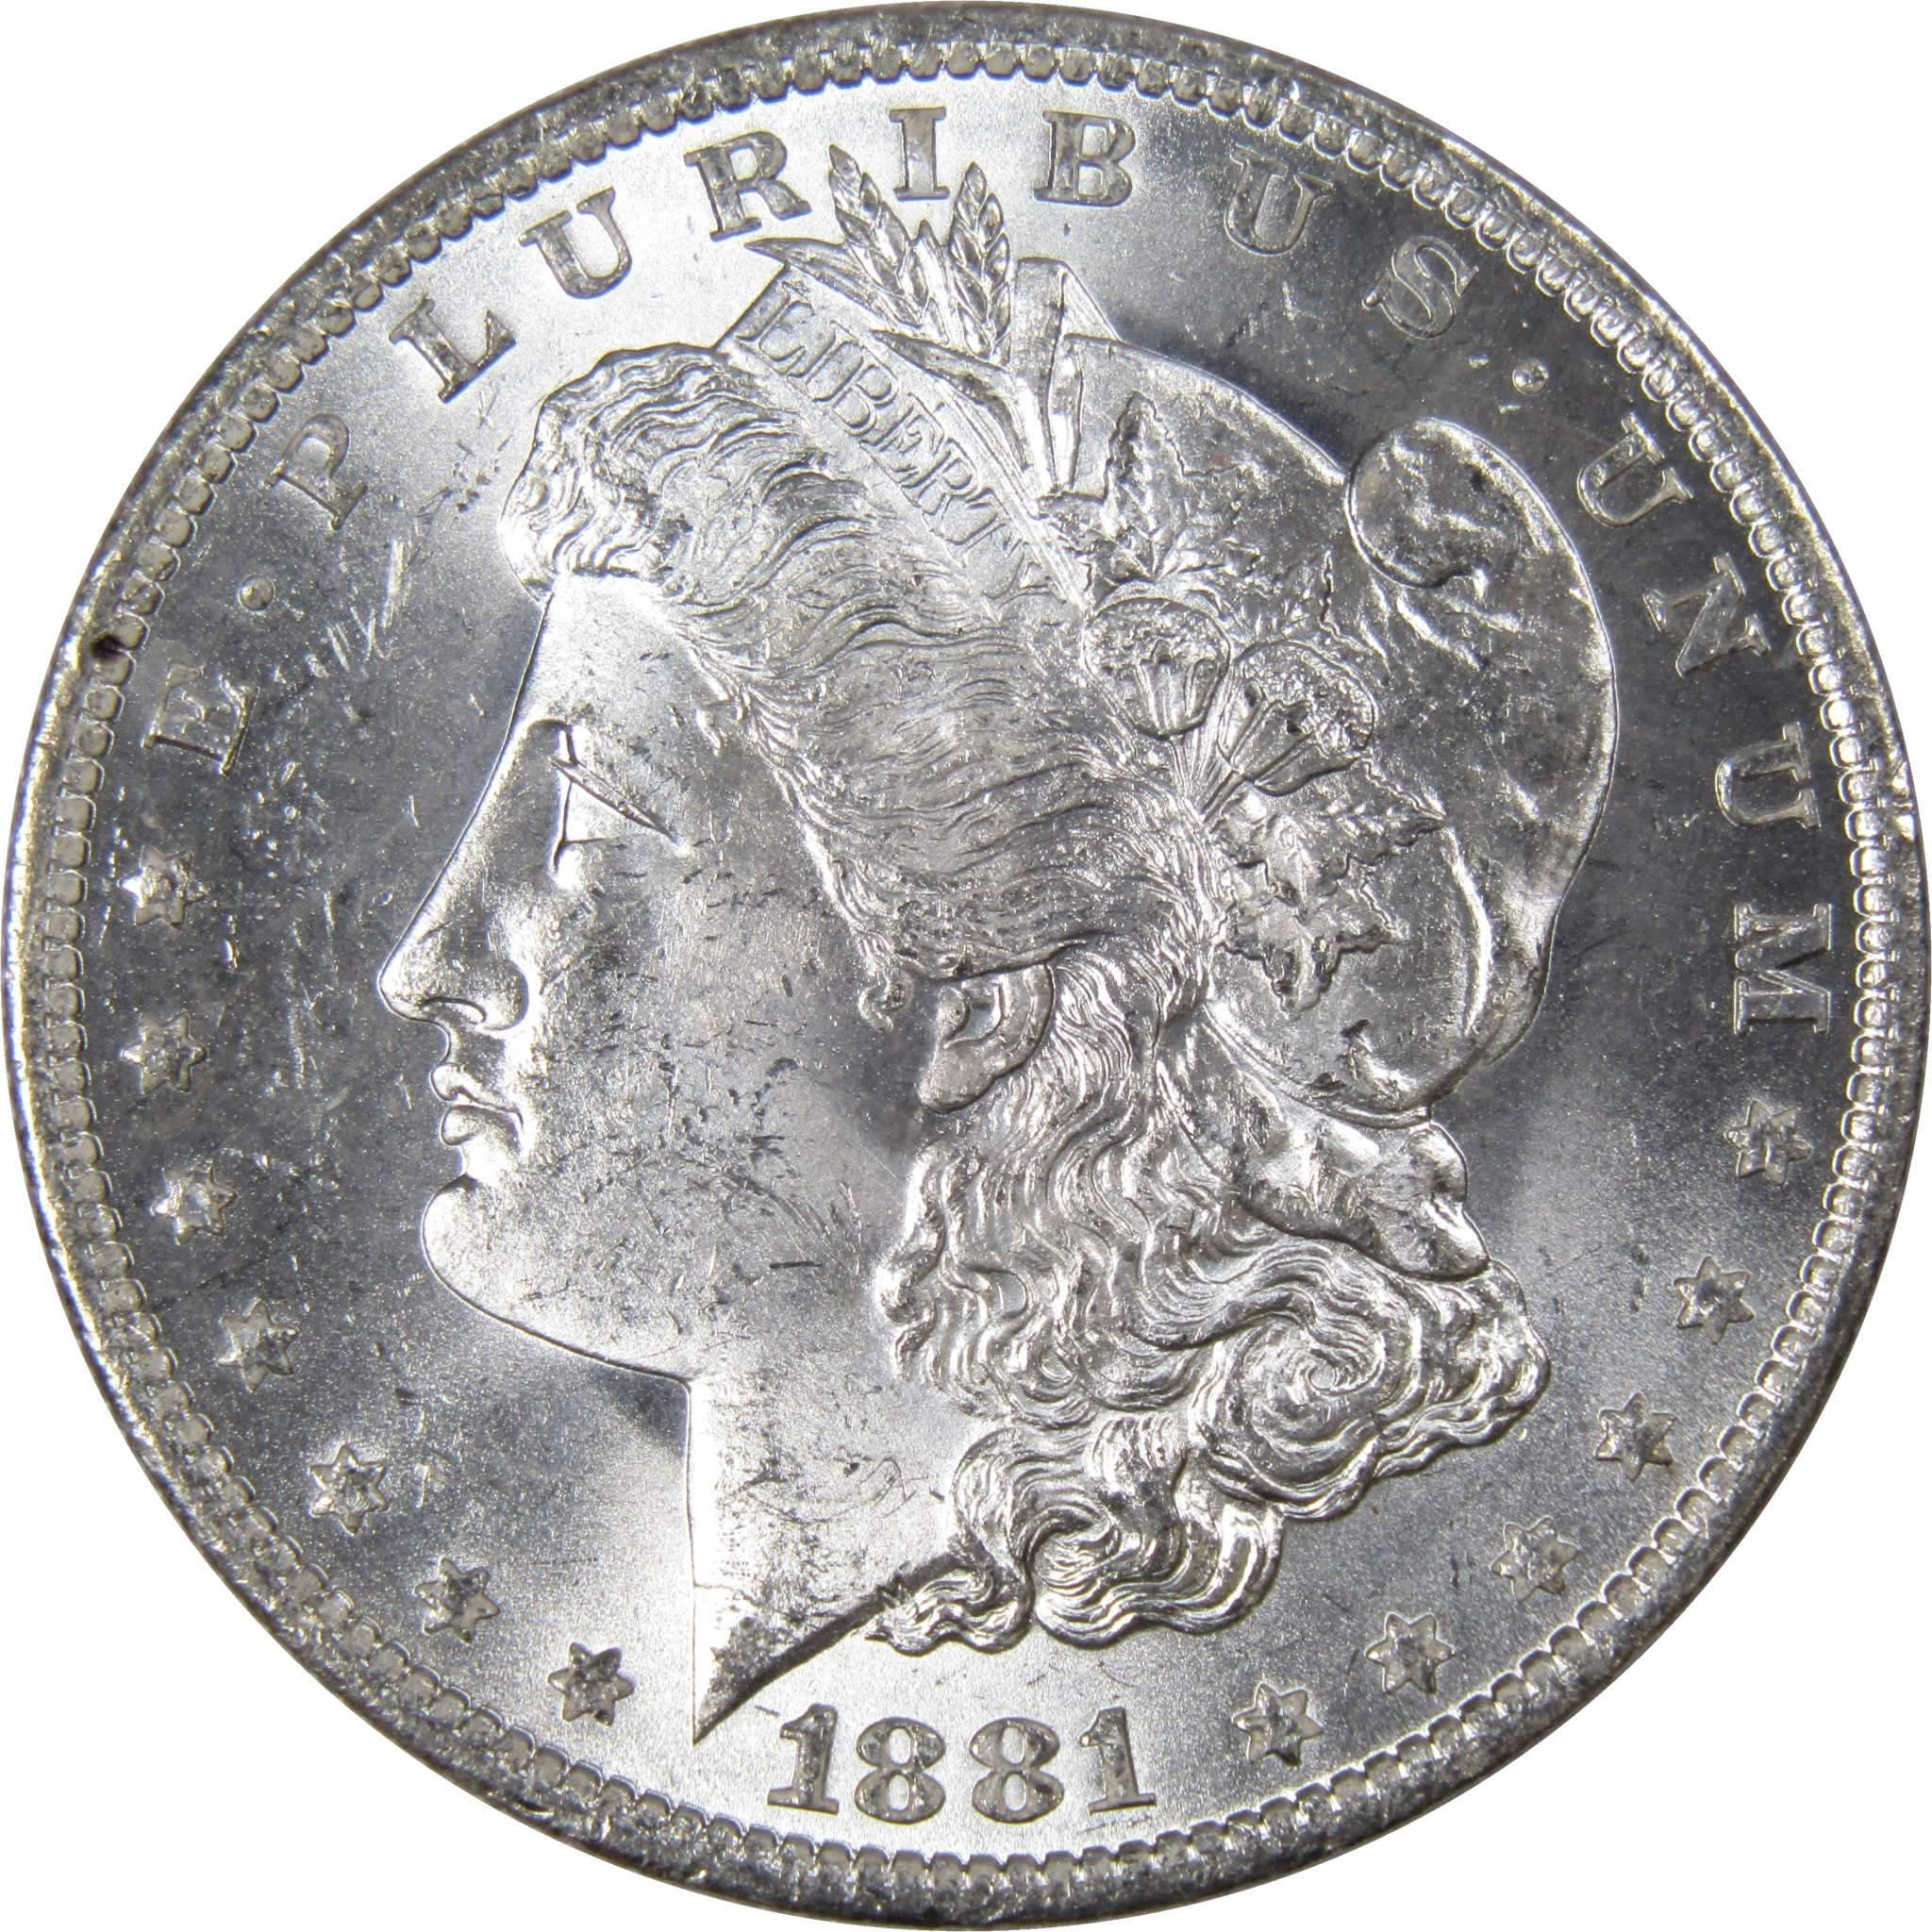 1881 O Morgan Dollar BU Uncirculated Mint State 90% Silver $1 US Coin - Morgan coin - Morgan silver dollar - Morgan silver dollar for sale - Profile Coins &amp; Collectibles